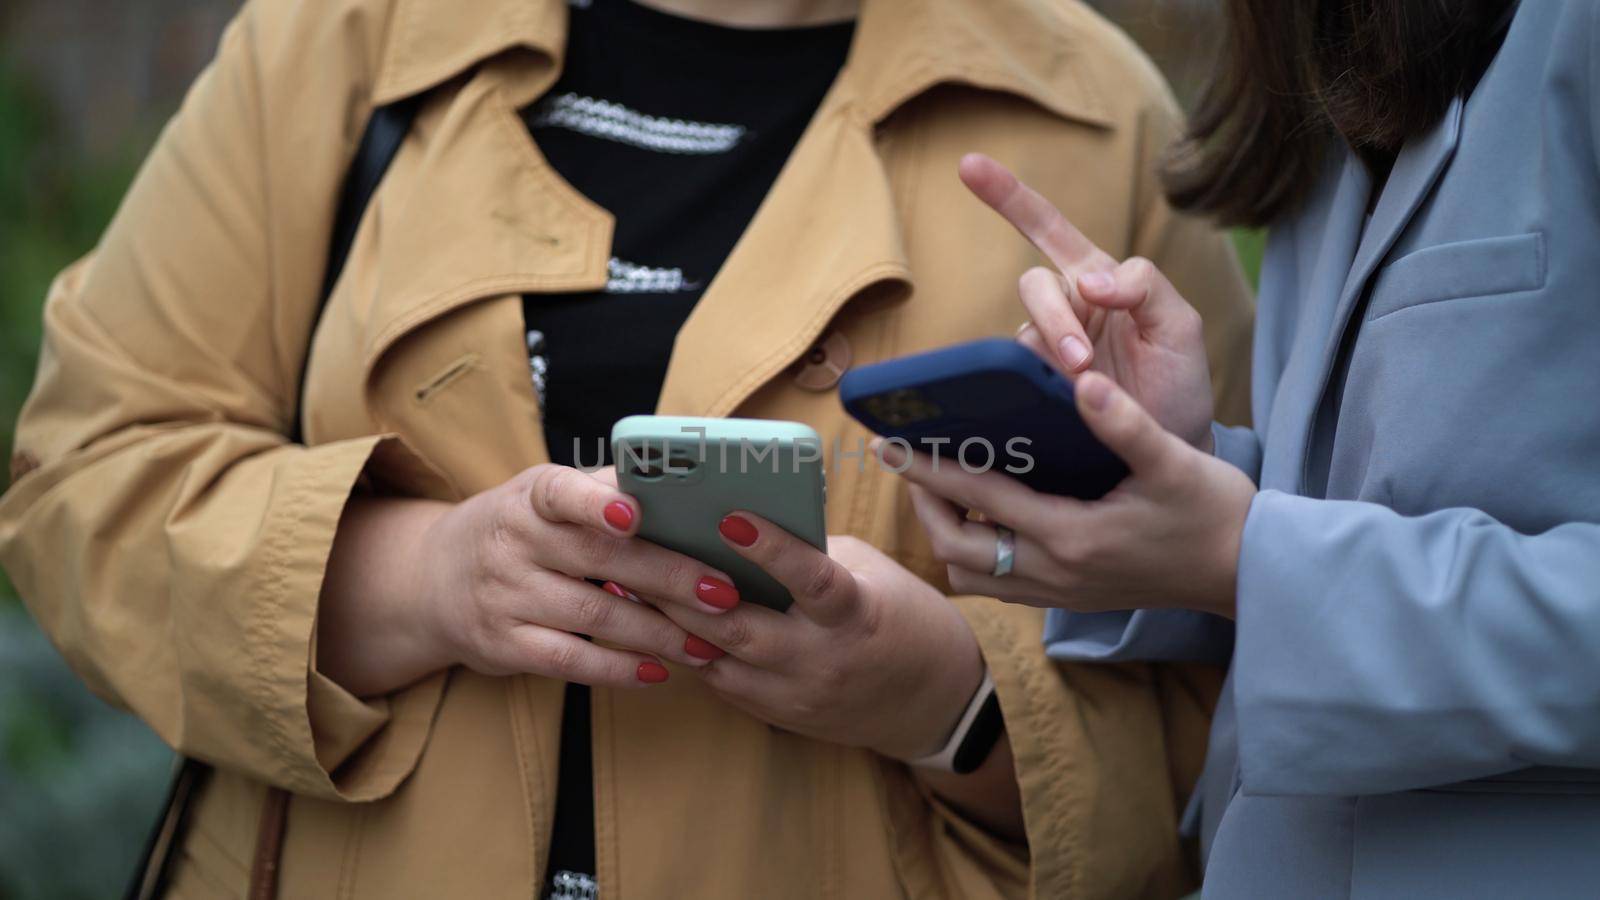 Women's hands hold smartphones. Women communicate and use phones.